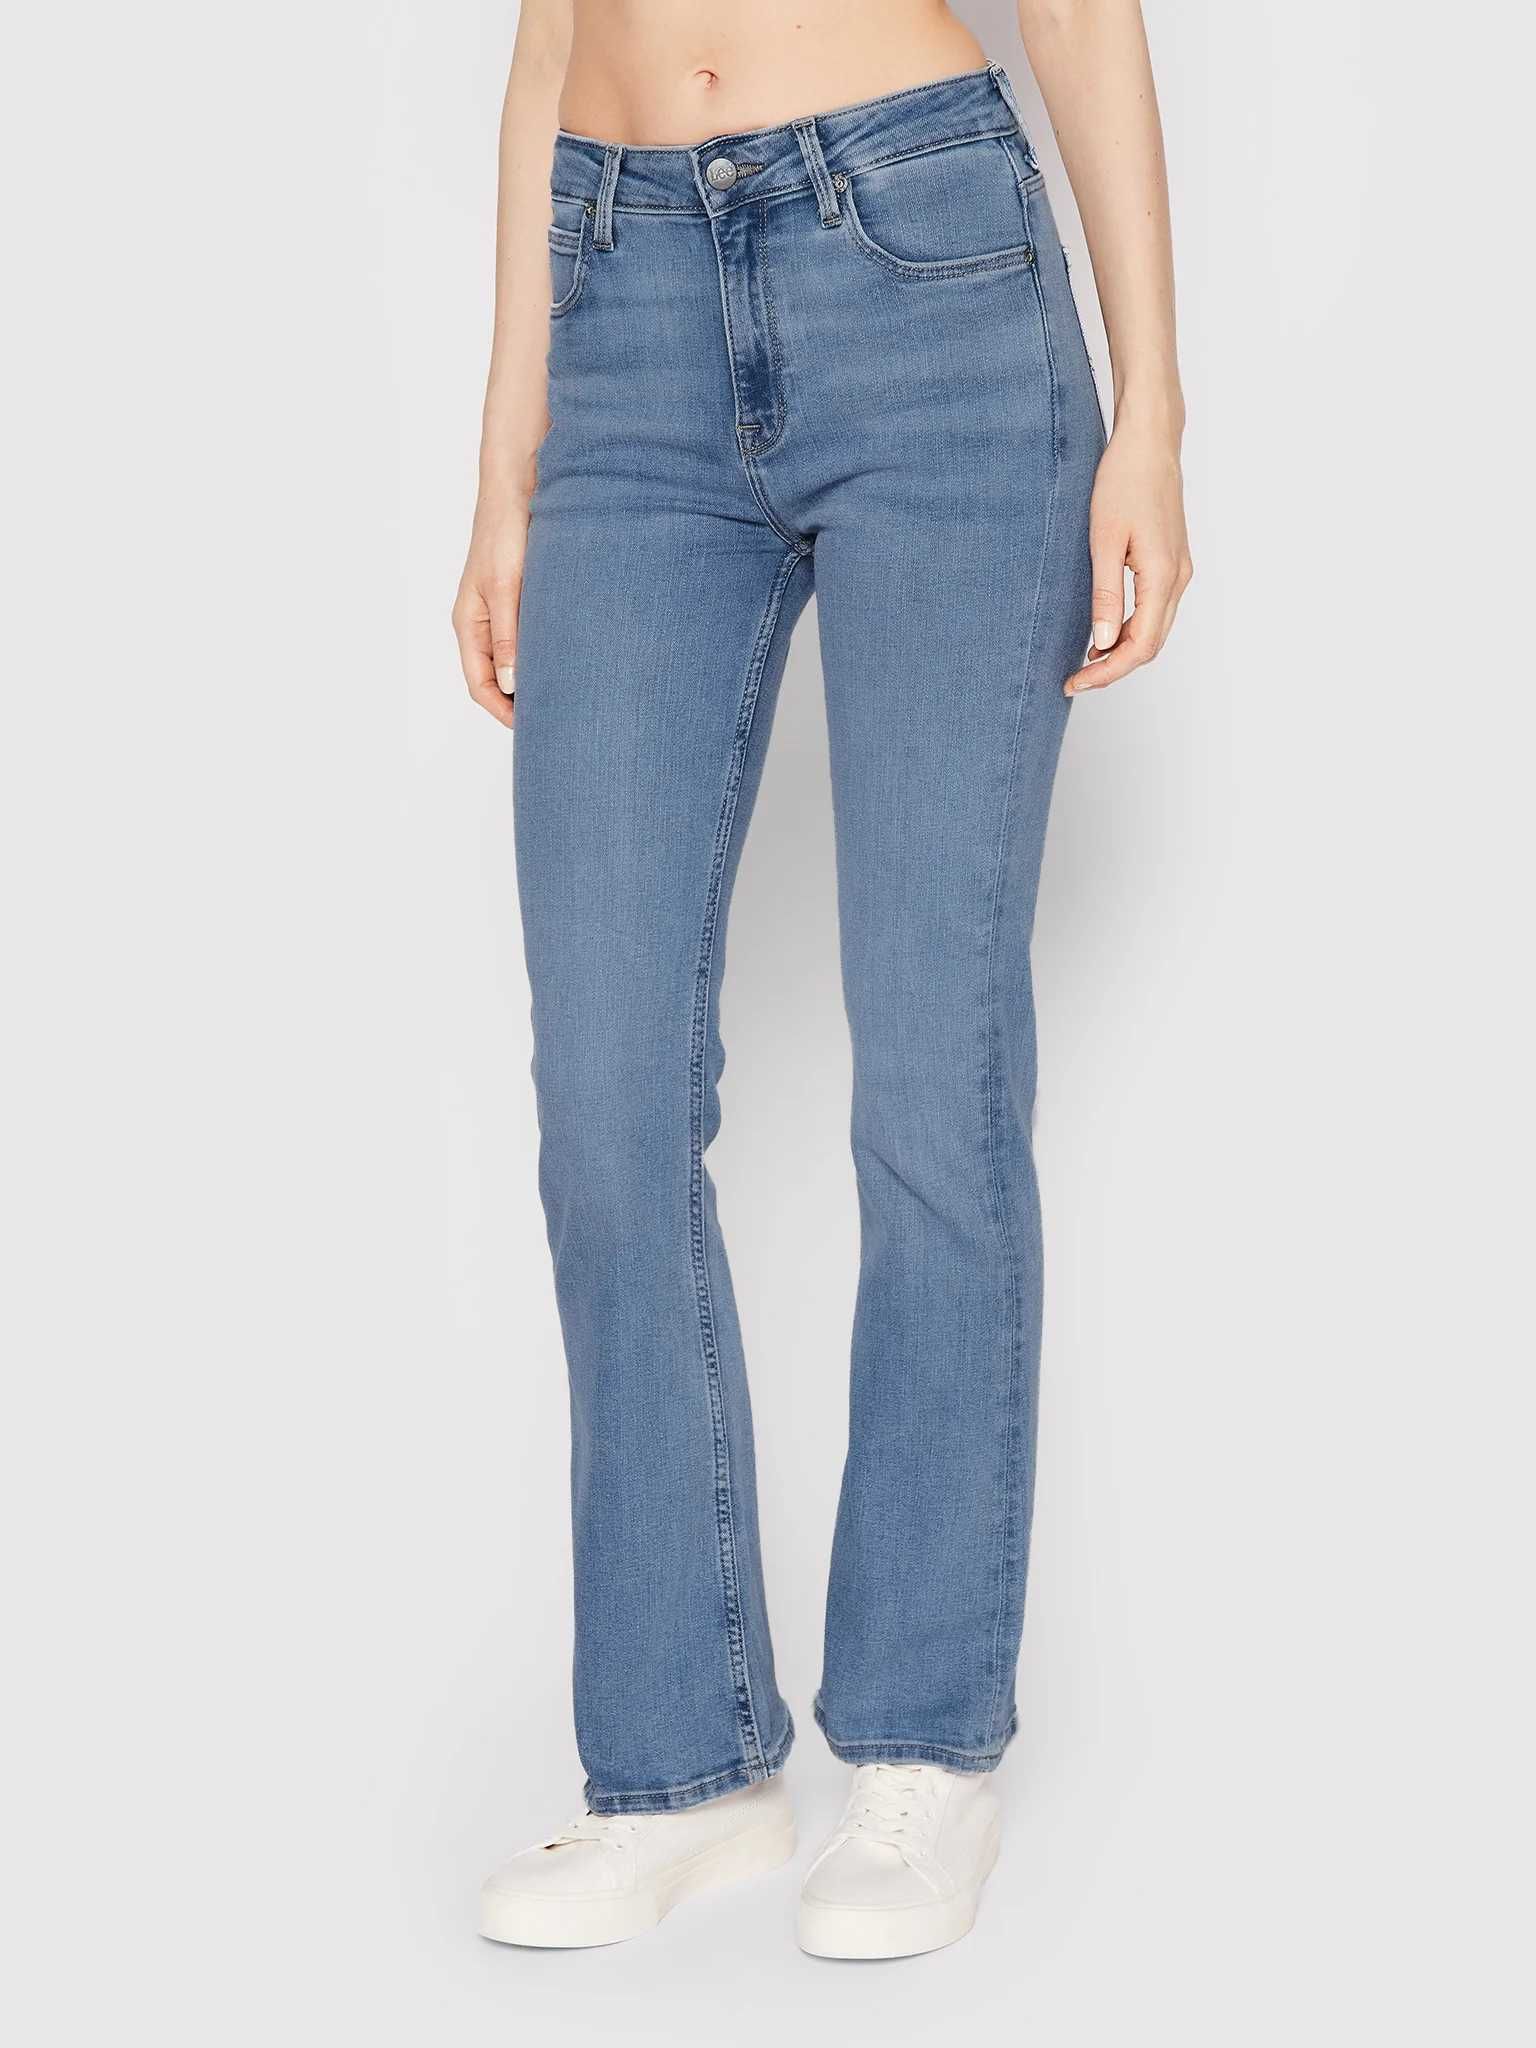 Blugi originali LEMMI Jeans, model foarte frumos, XS, S, M